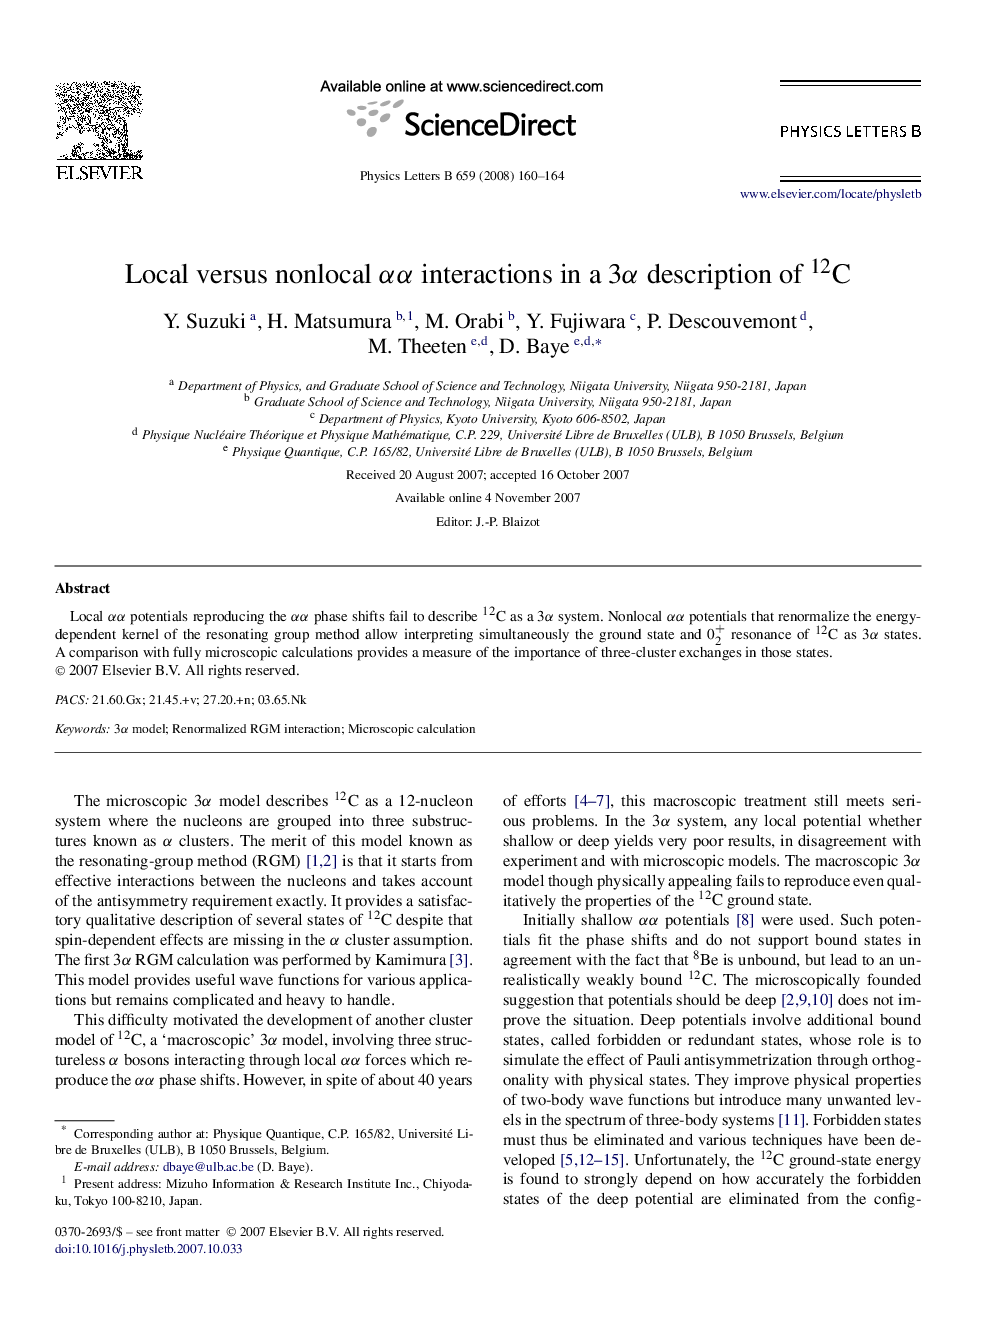 Local versus nonlocal Î±Î± interactions in a 3Î± description of 12C